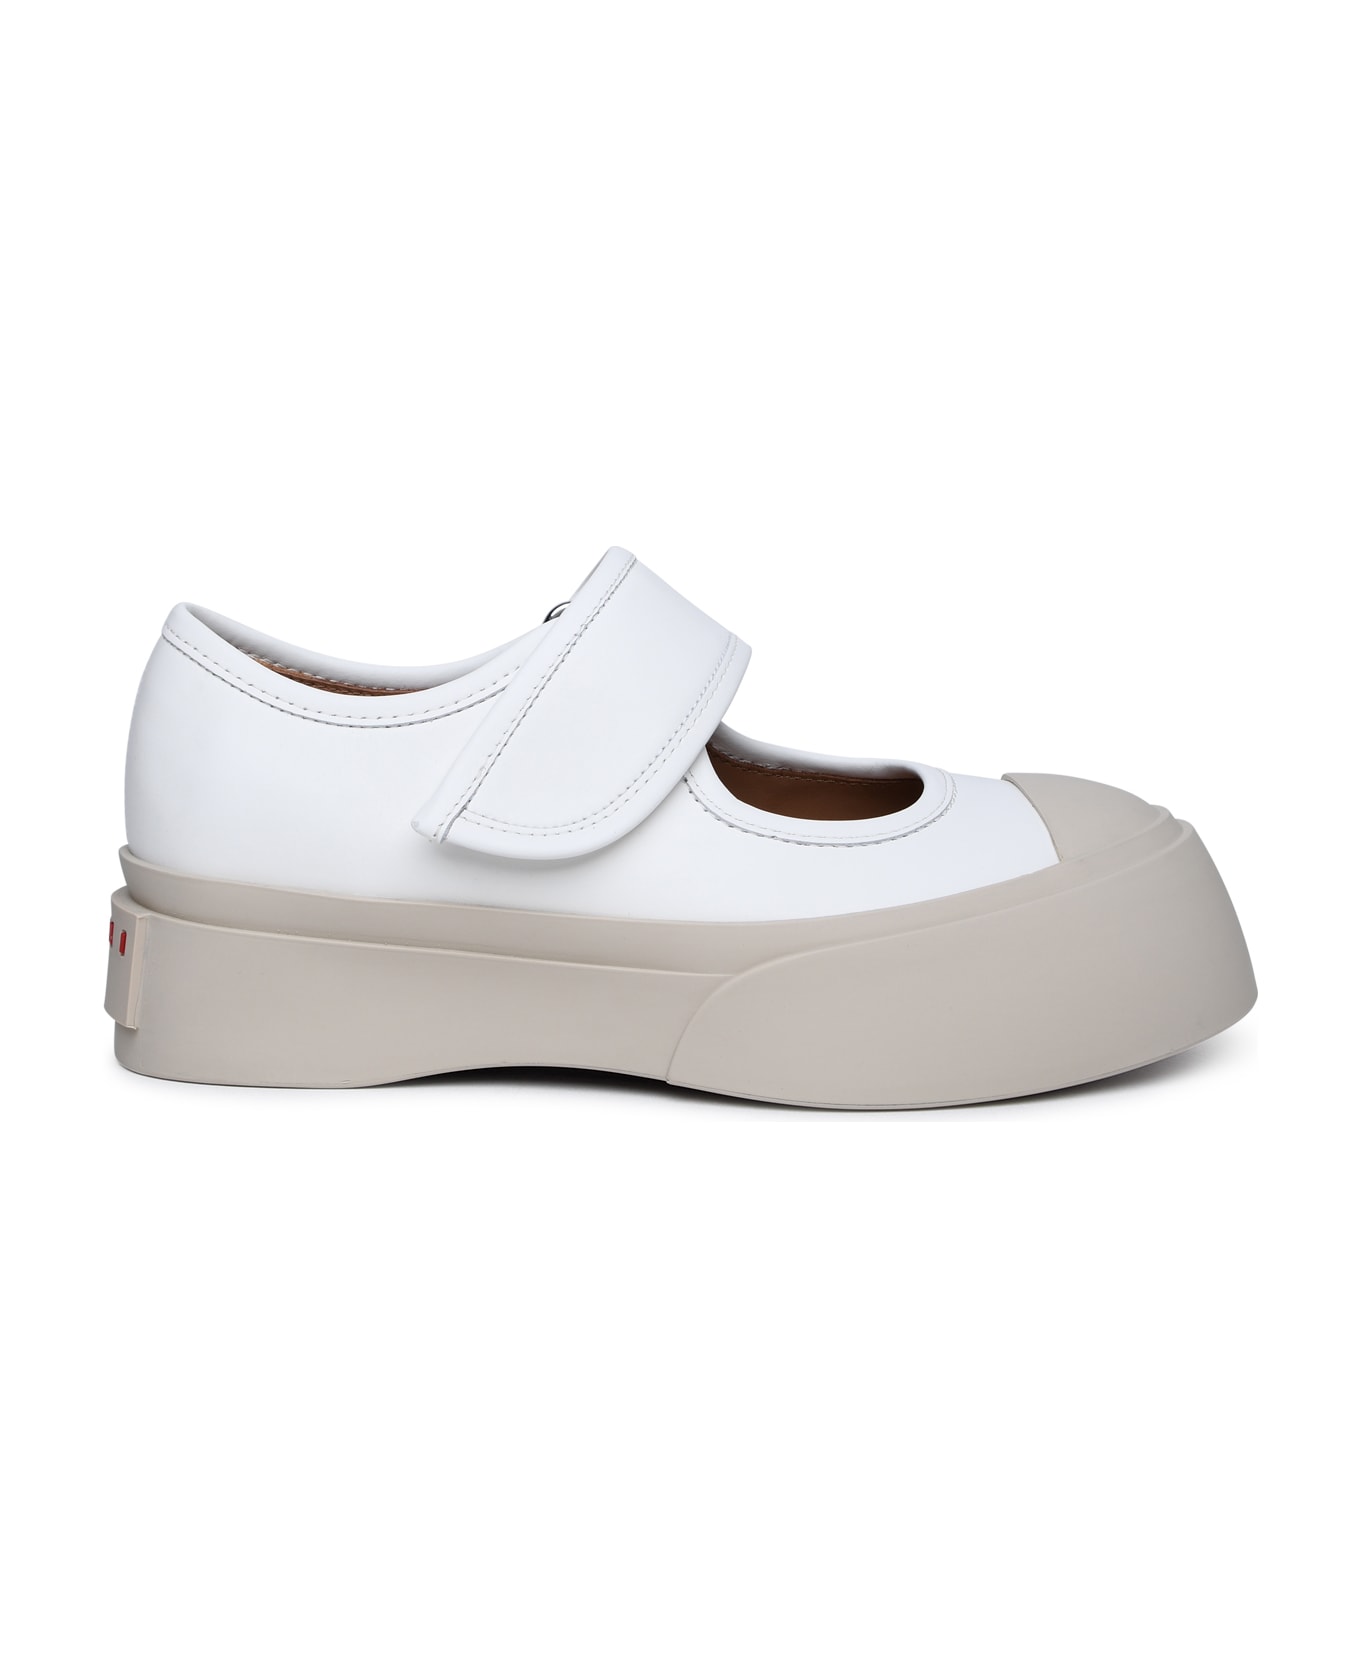 Marni 'mary Jane' White Nappa Leather Sneakers - White